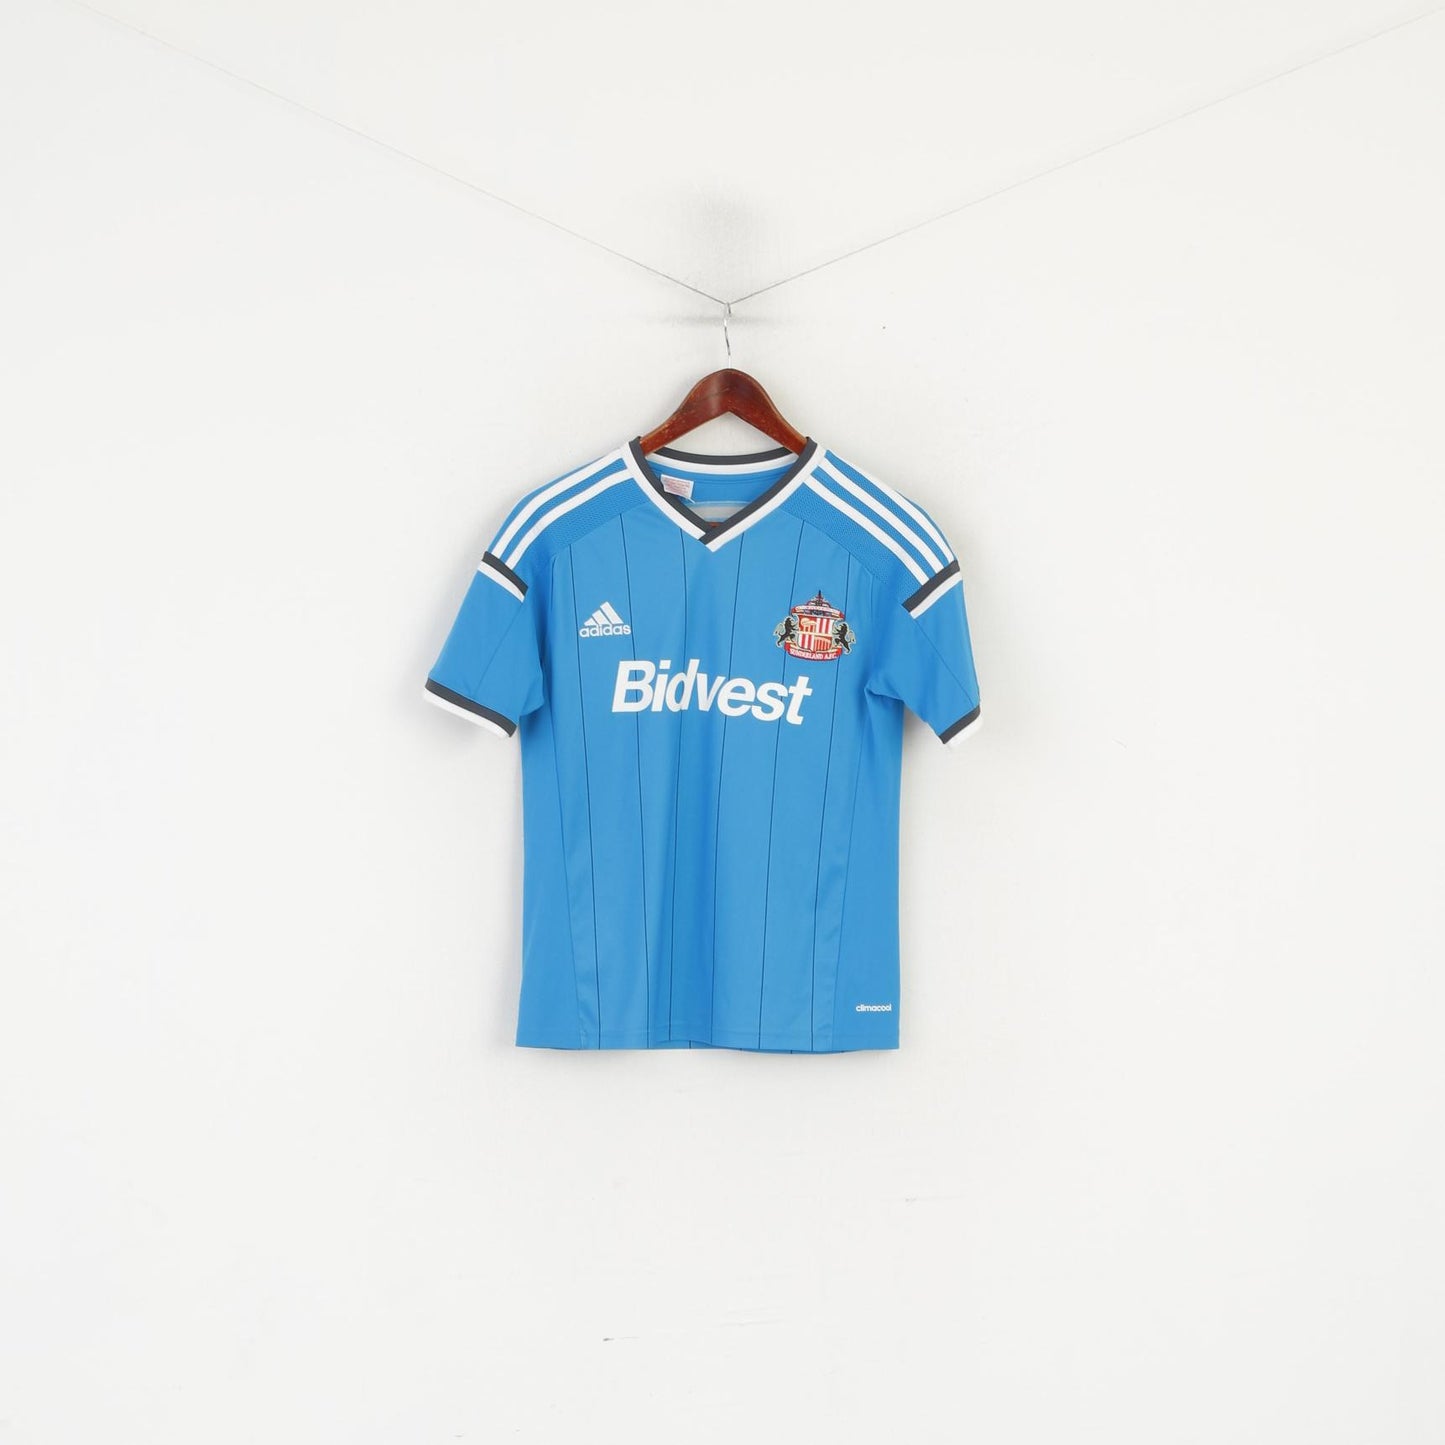 Adidas Boys YXL 164 Shirt Blue Sunderland Football #10 KIERAN Jersey Top